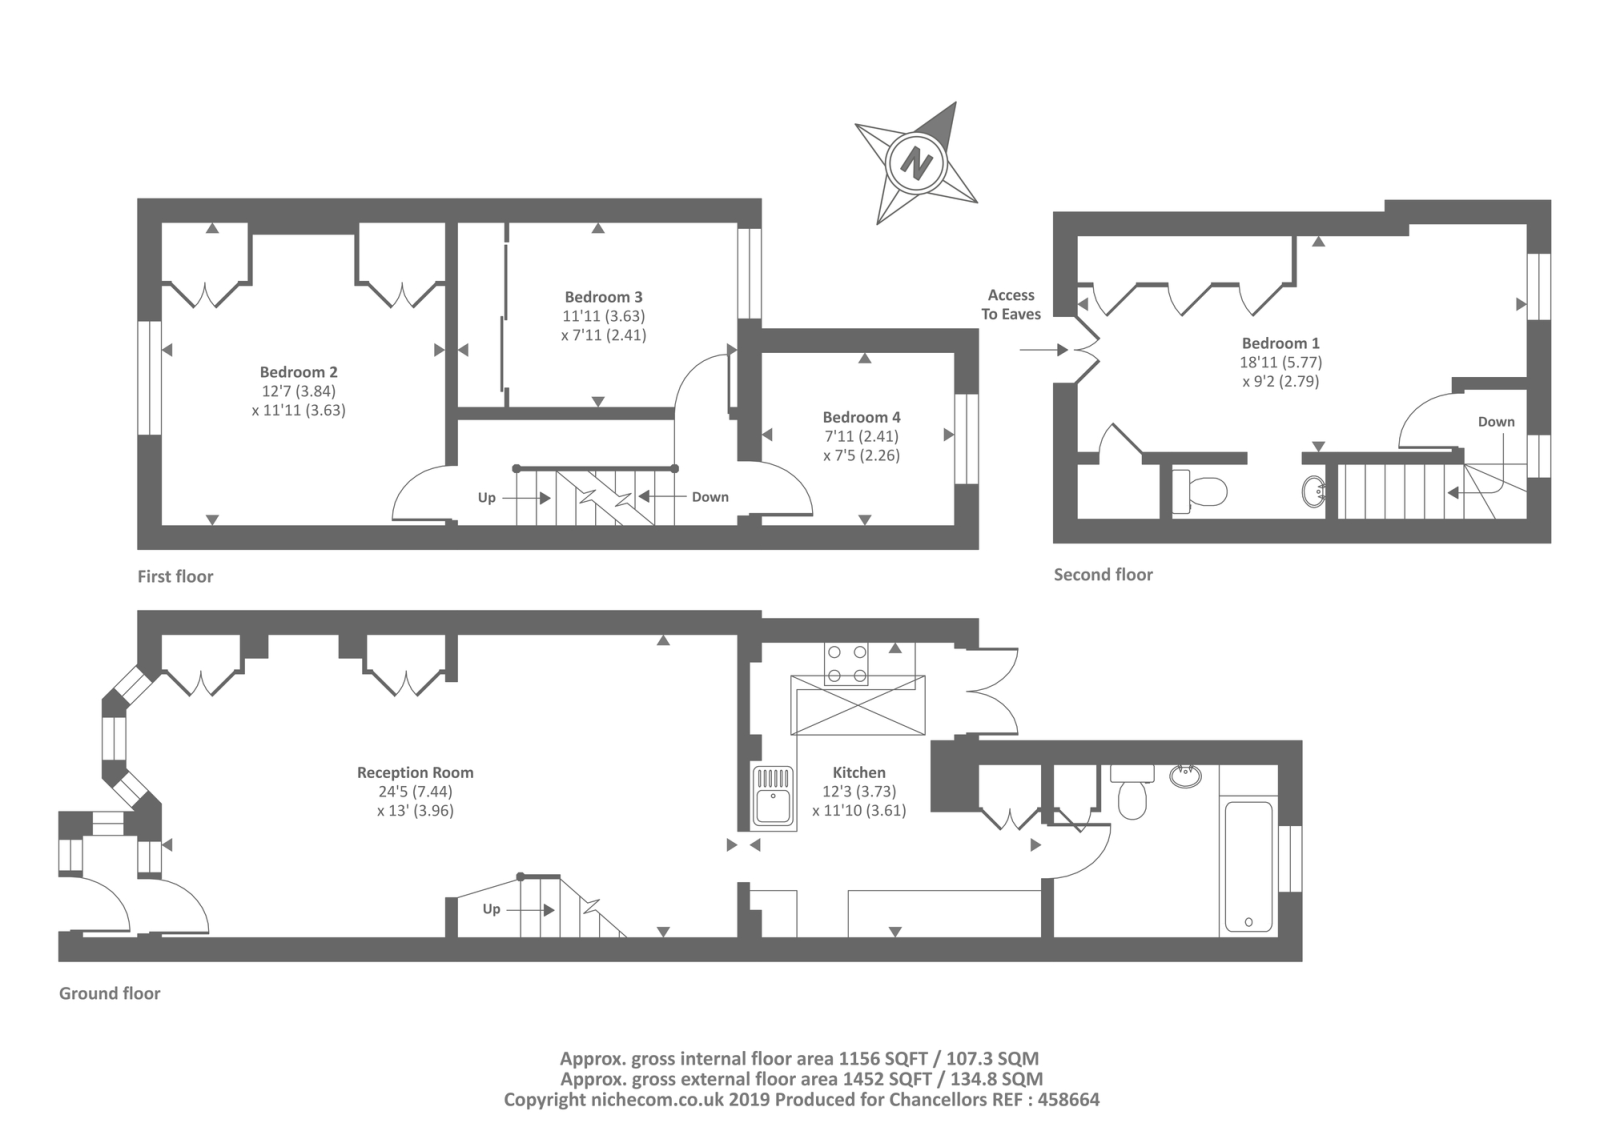 3 Bedrooms Semi-detached house for sale in Egham, Surrey TW20